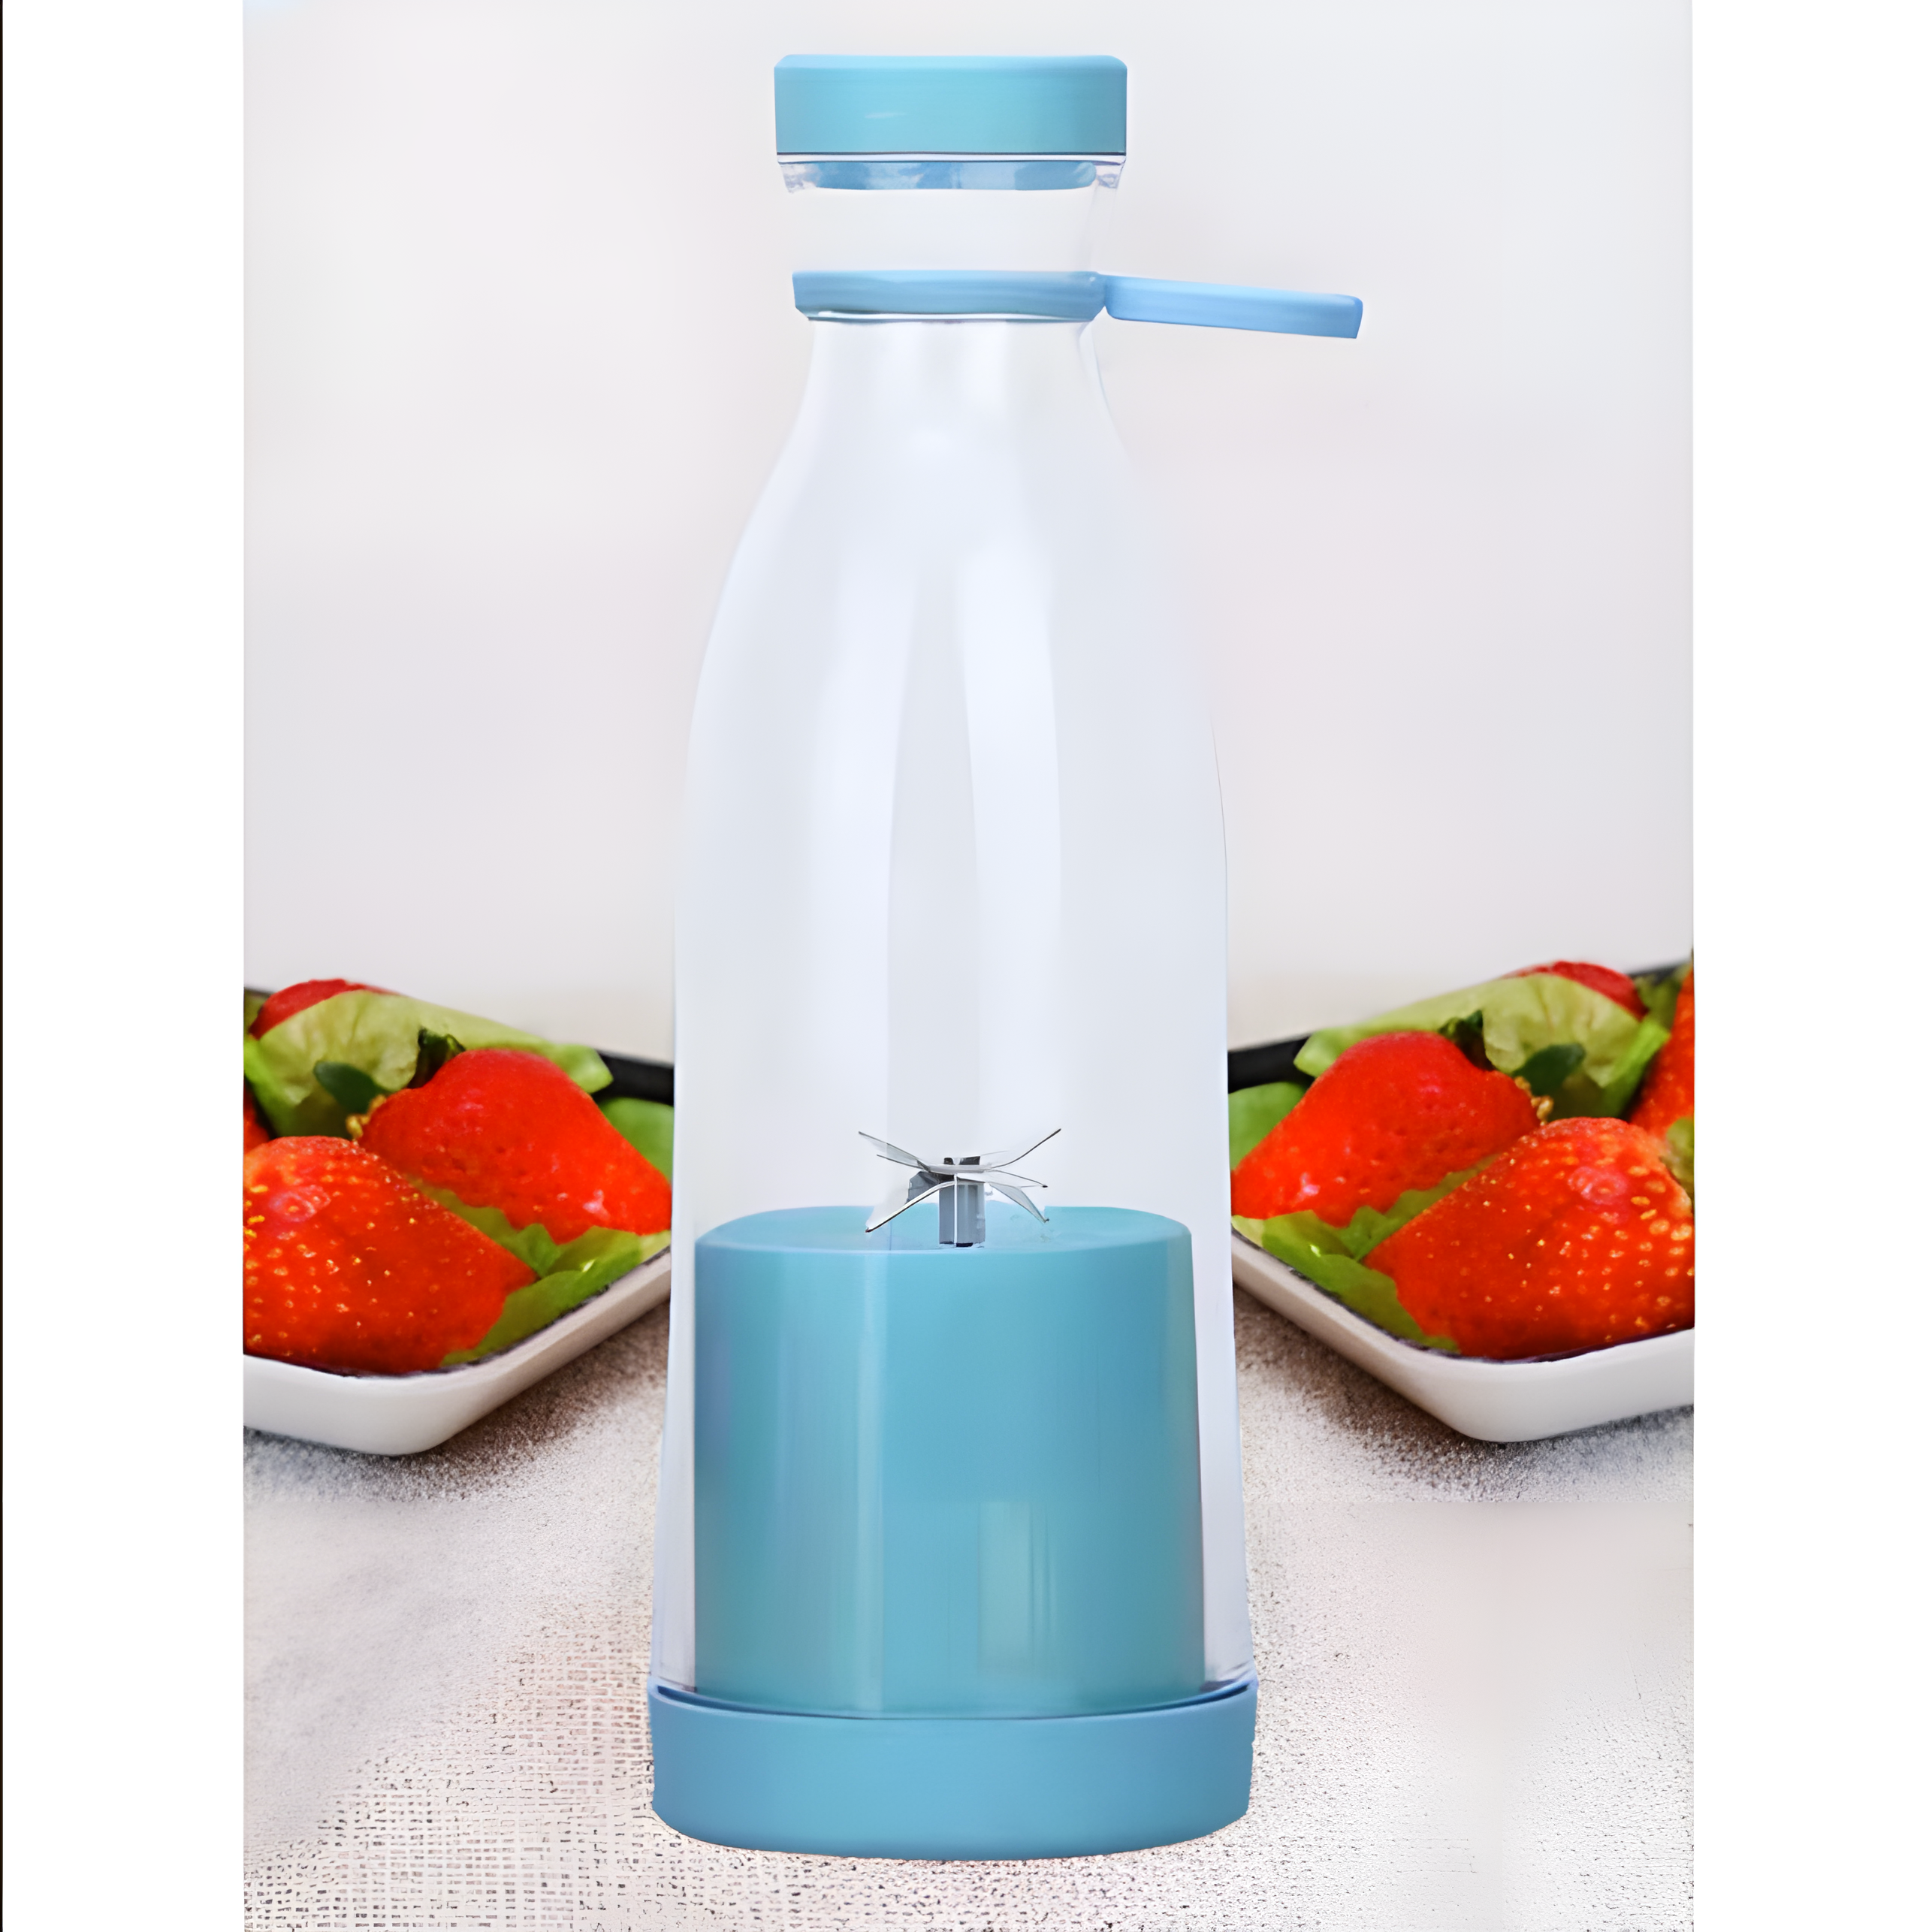 Mini Portable and Rechargeable Juice Maker, Blender Mixer USB Rechargeable Mini Fruit Juicer Blender - Blue image